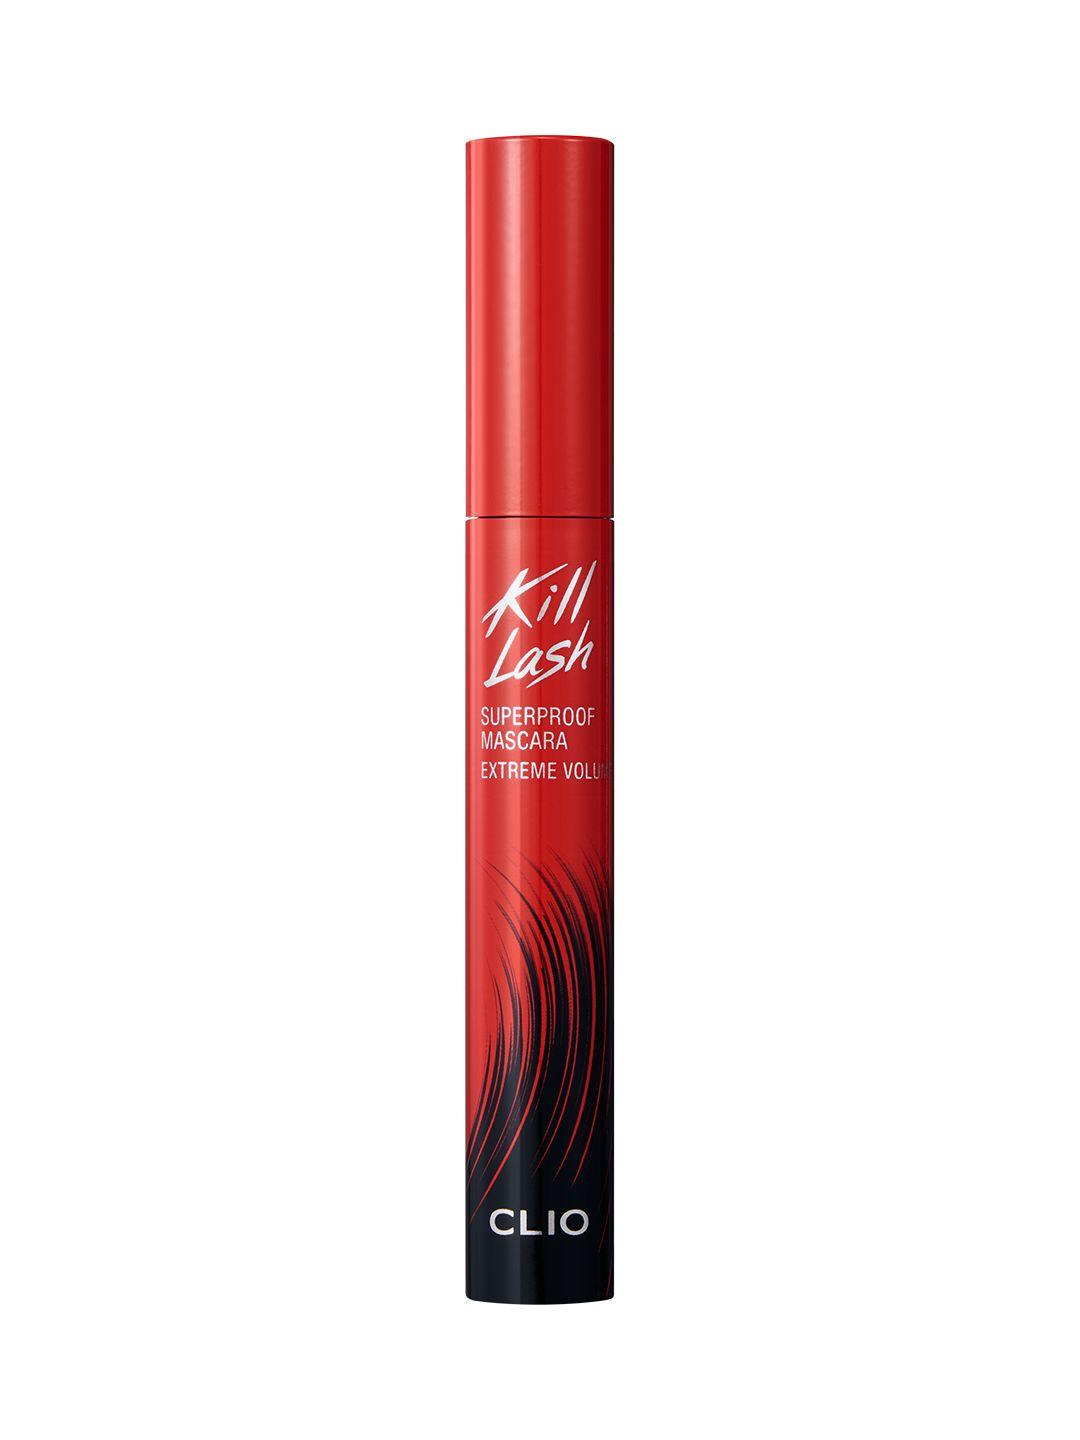 CLIO Kill Lash Superproof Mascara 8.5 g - Extreme Volume 004